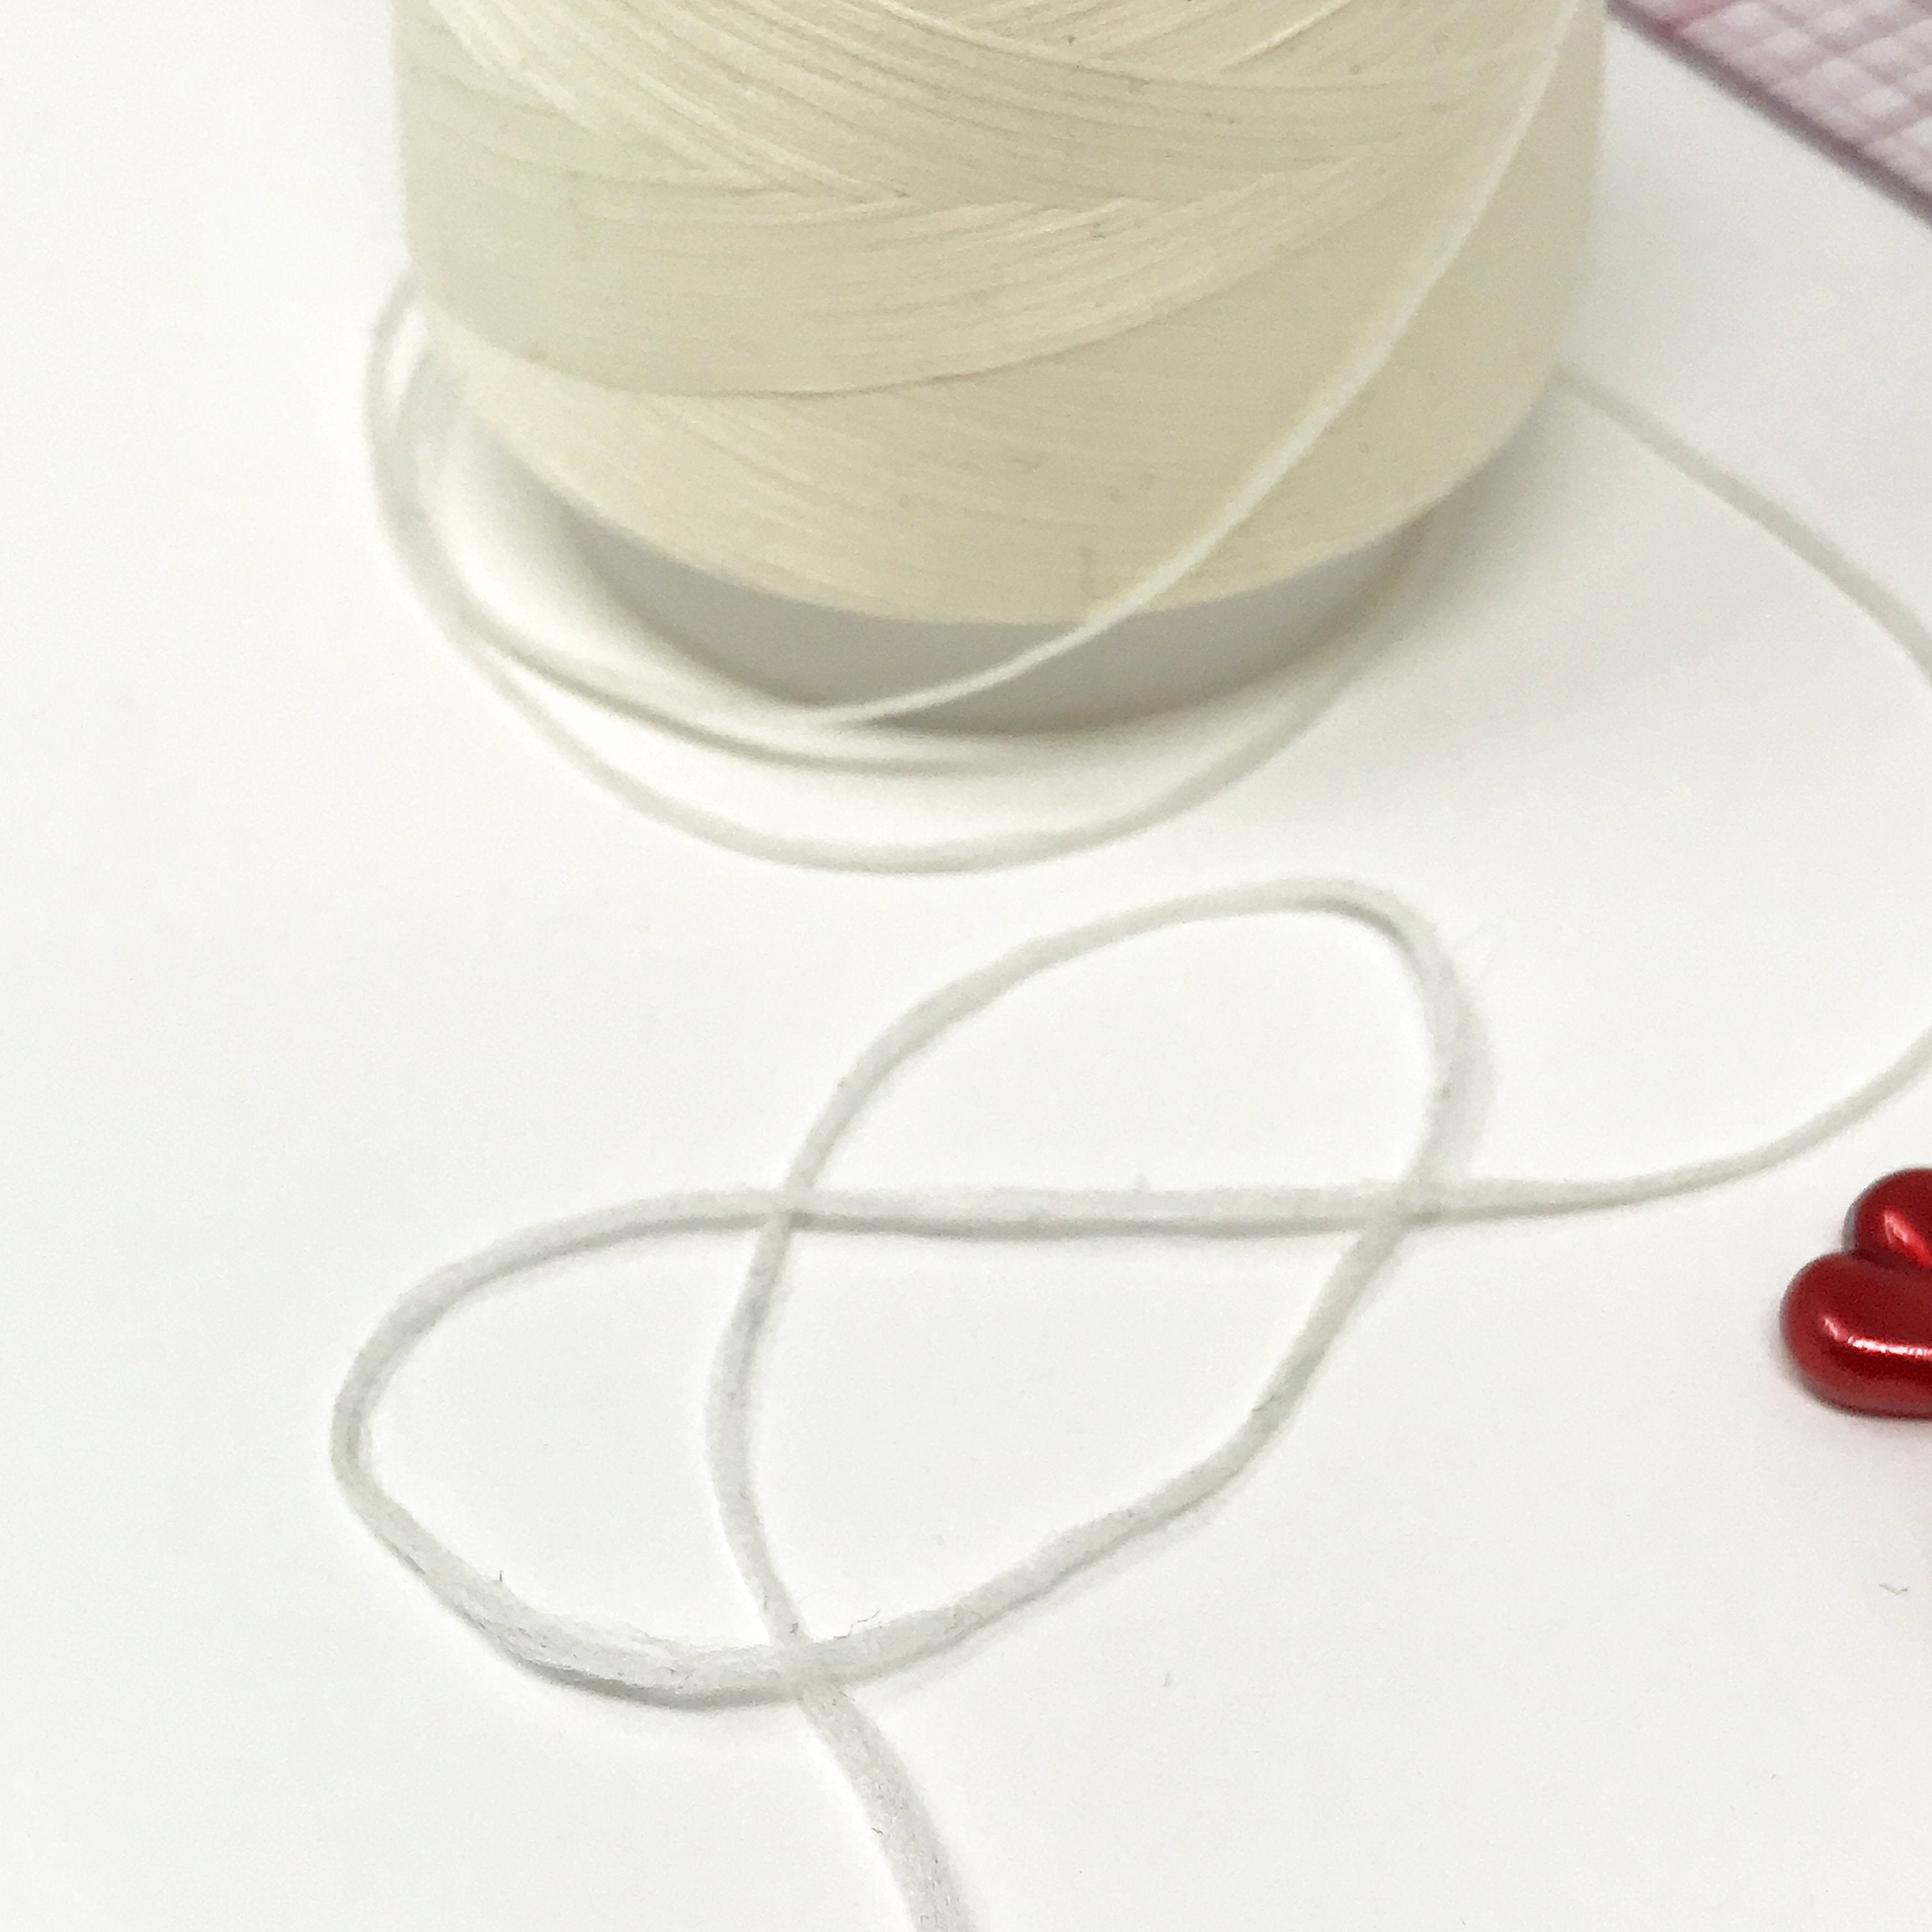 Stretch Thread Textured Nylon Thread for Bobbin or Looper. Maxi-Lock, 2000 Yards - Stitch Love Studio